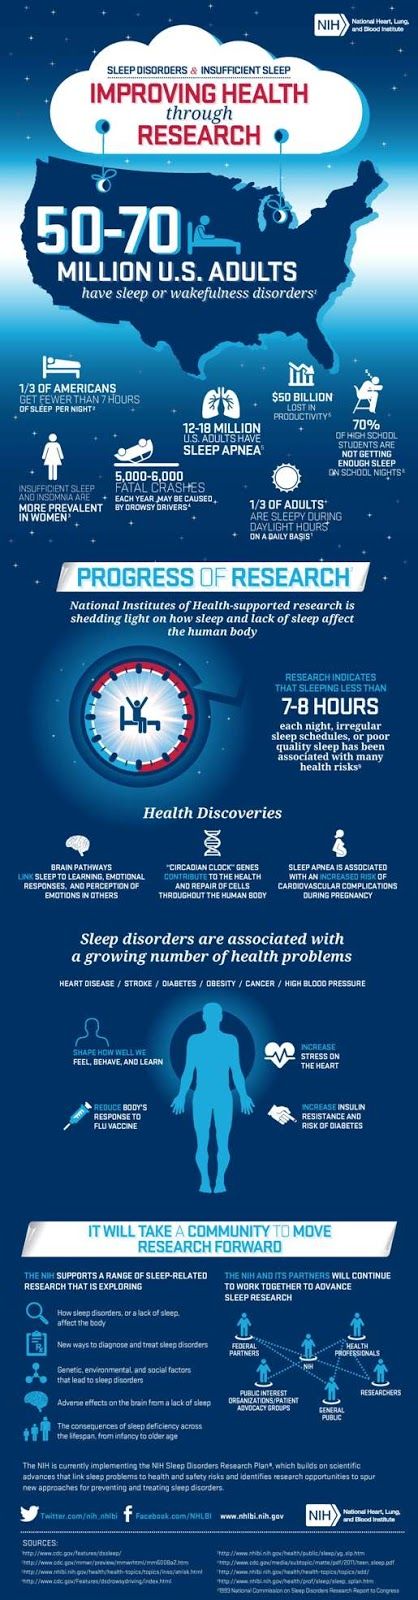 Sleep Disorders & Insufficient Sleep Infographic